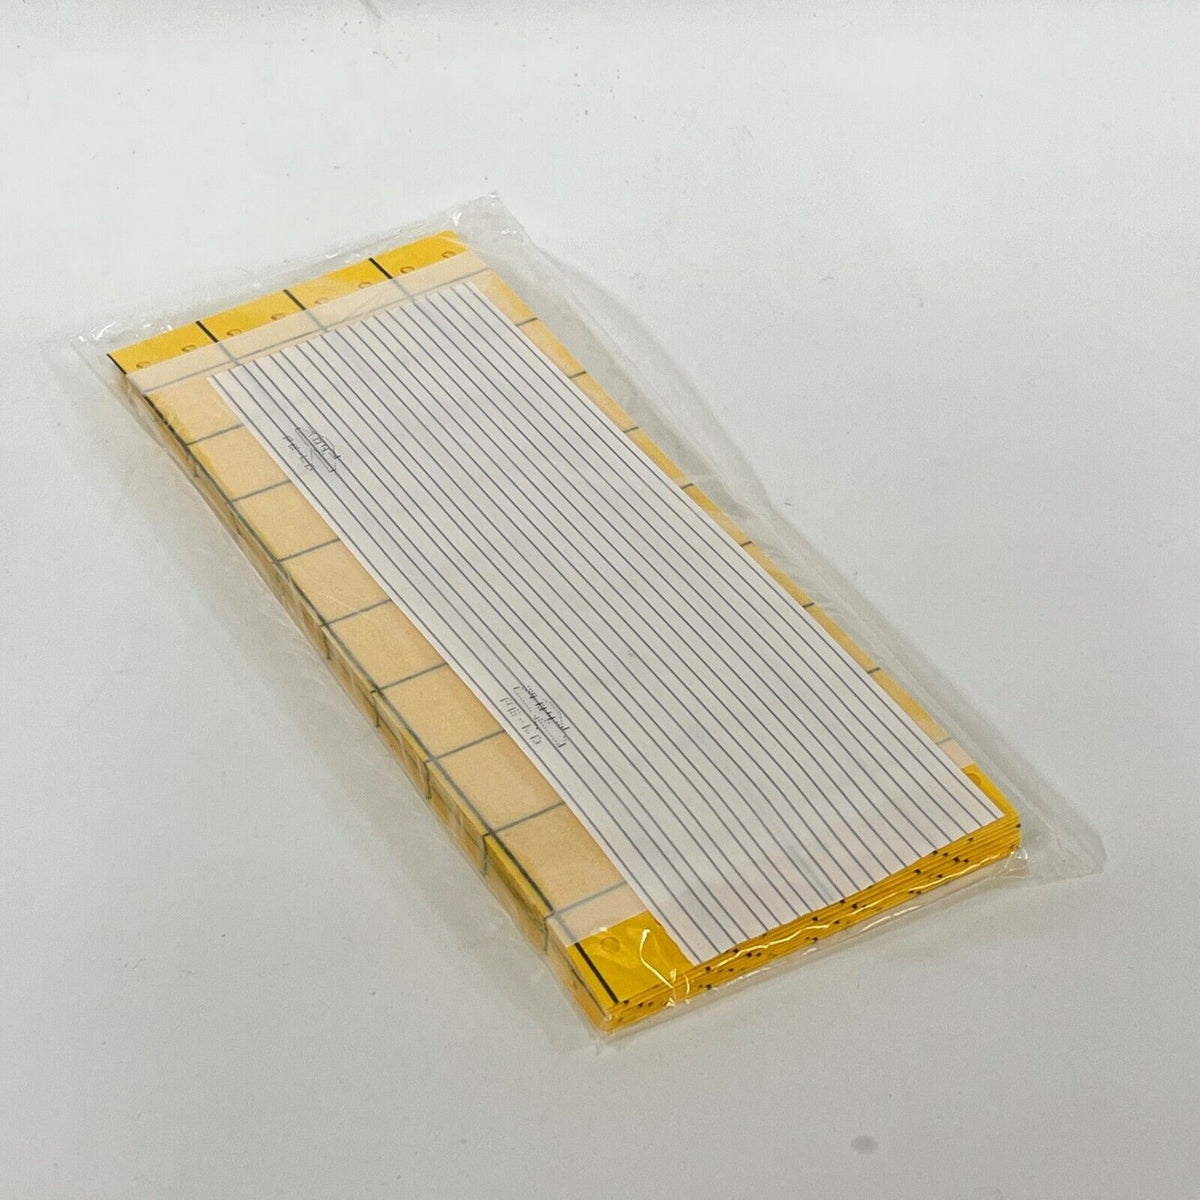 Yellow dry glue sticky trap card 245x100mm (x20)